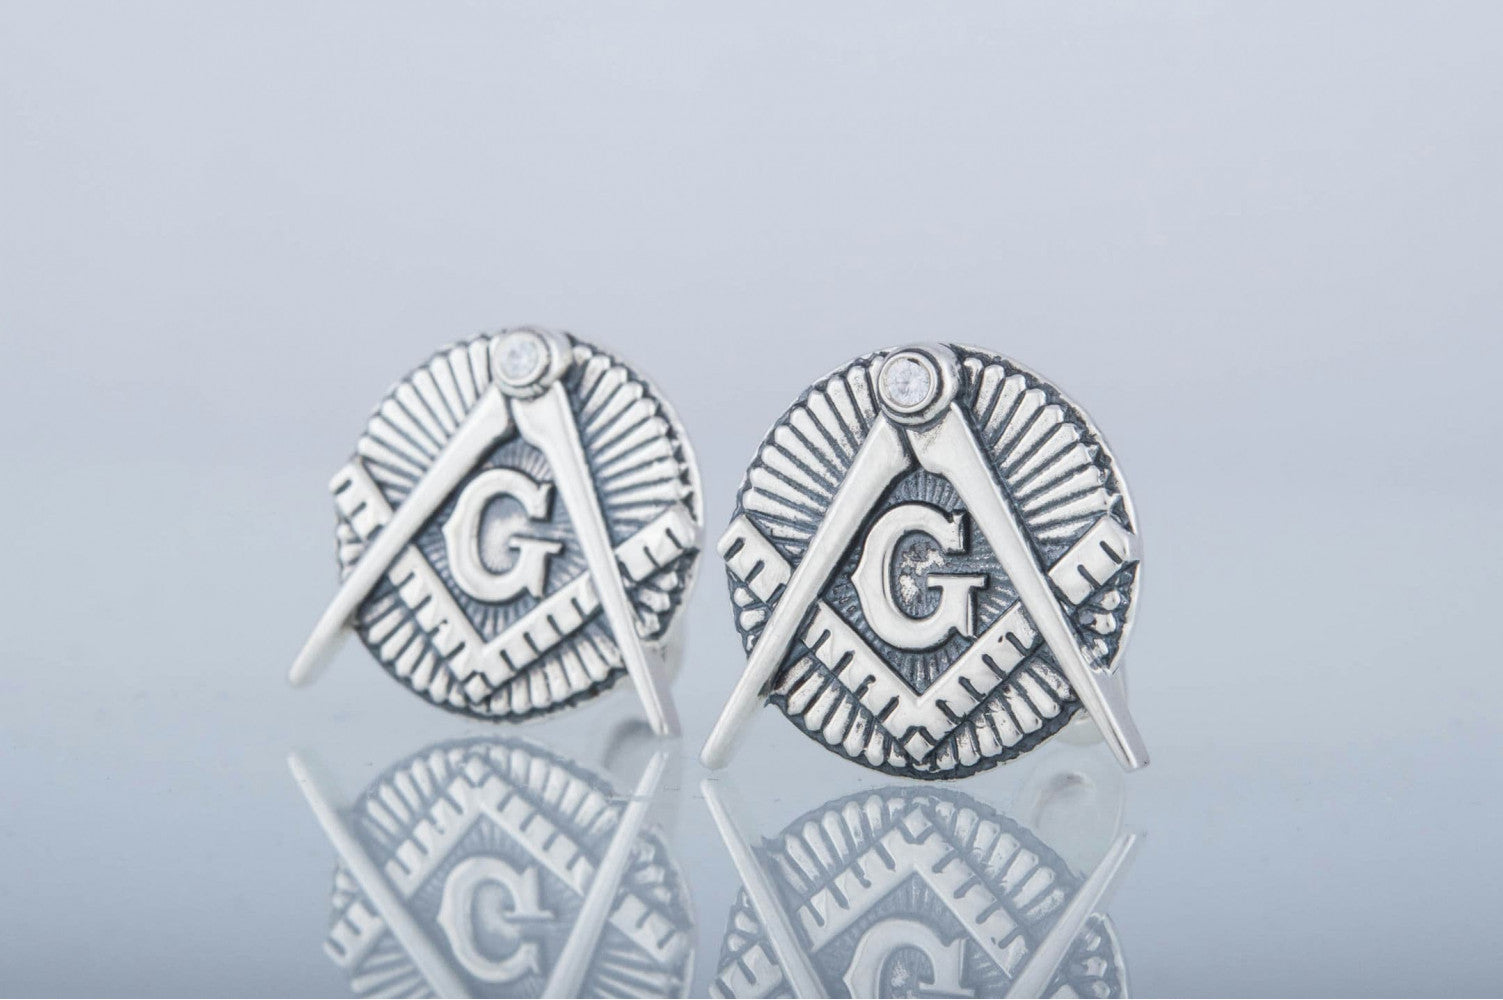 Unique Cufflinks with Masonic Symbol Sterling Silver Jewelry - vikingworkshop